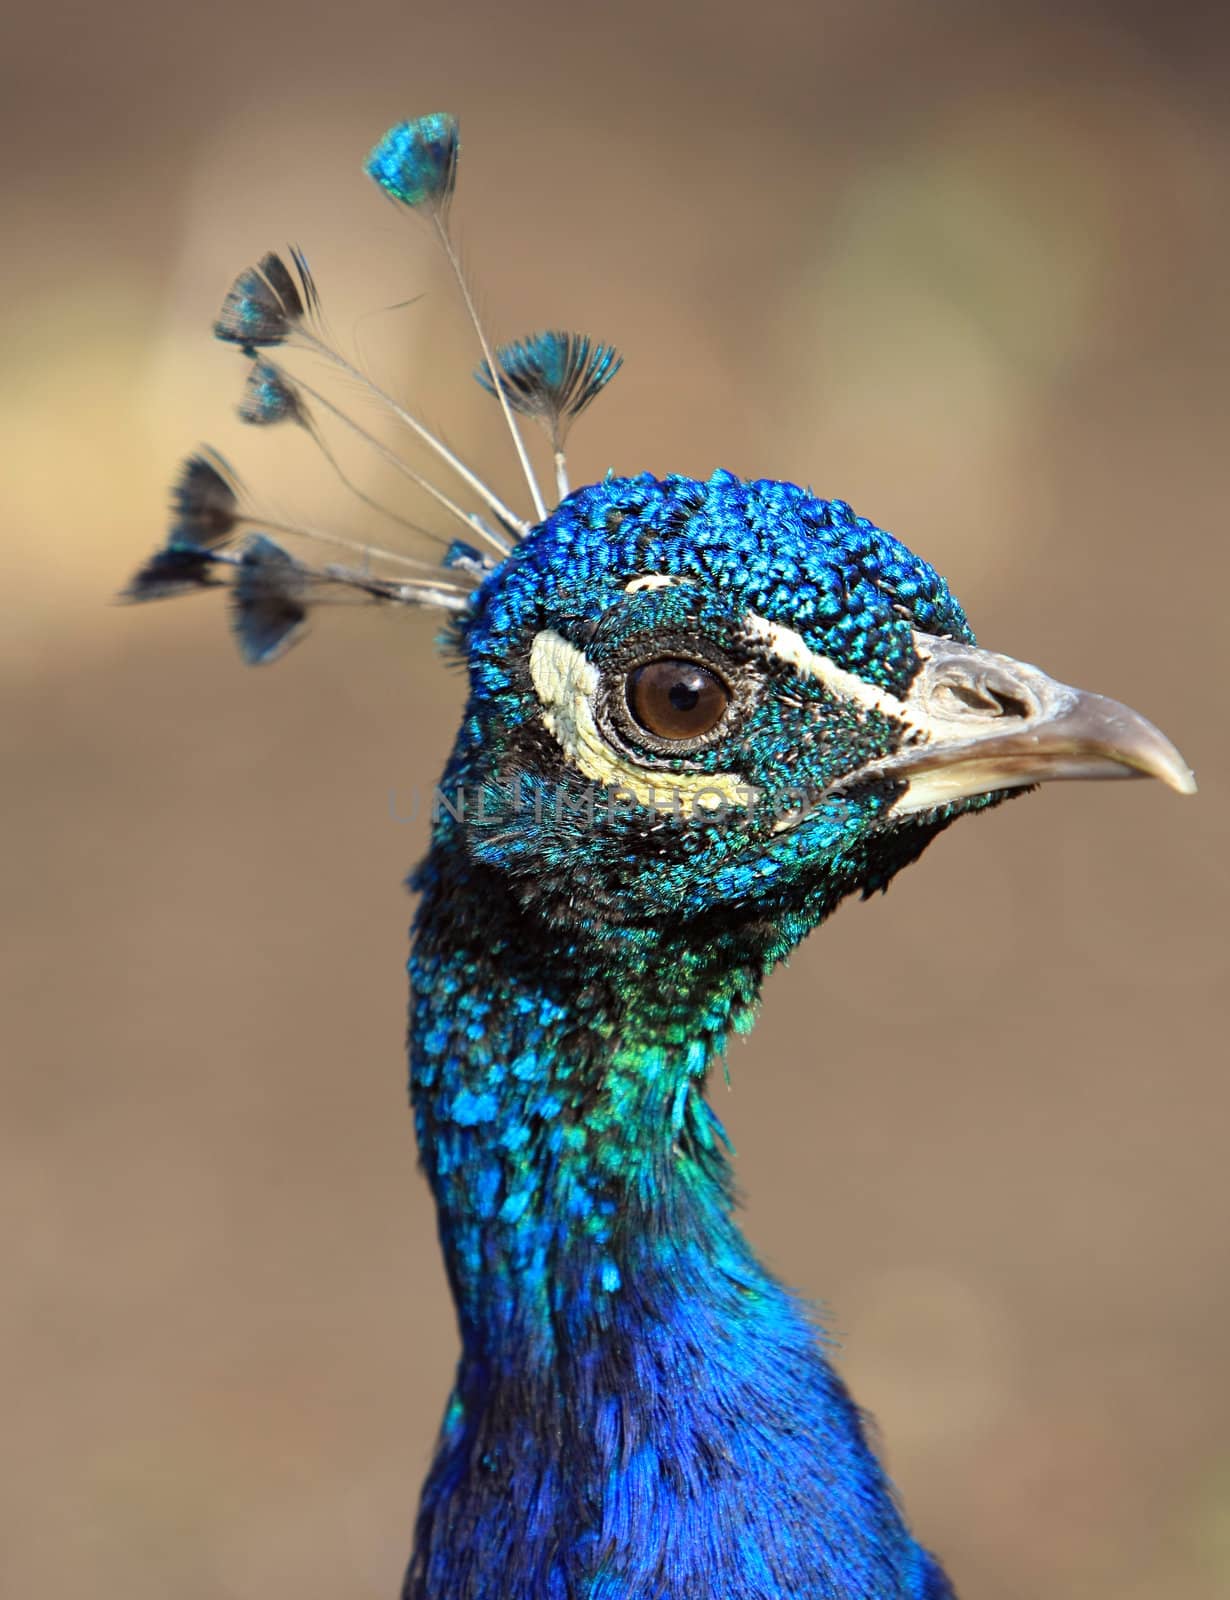 Male peacock. Ascania-Nova. Ukraine